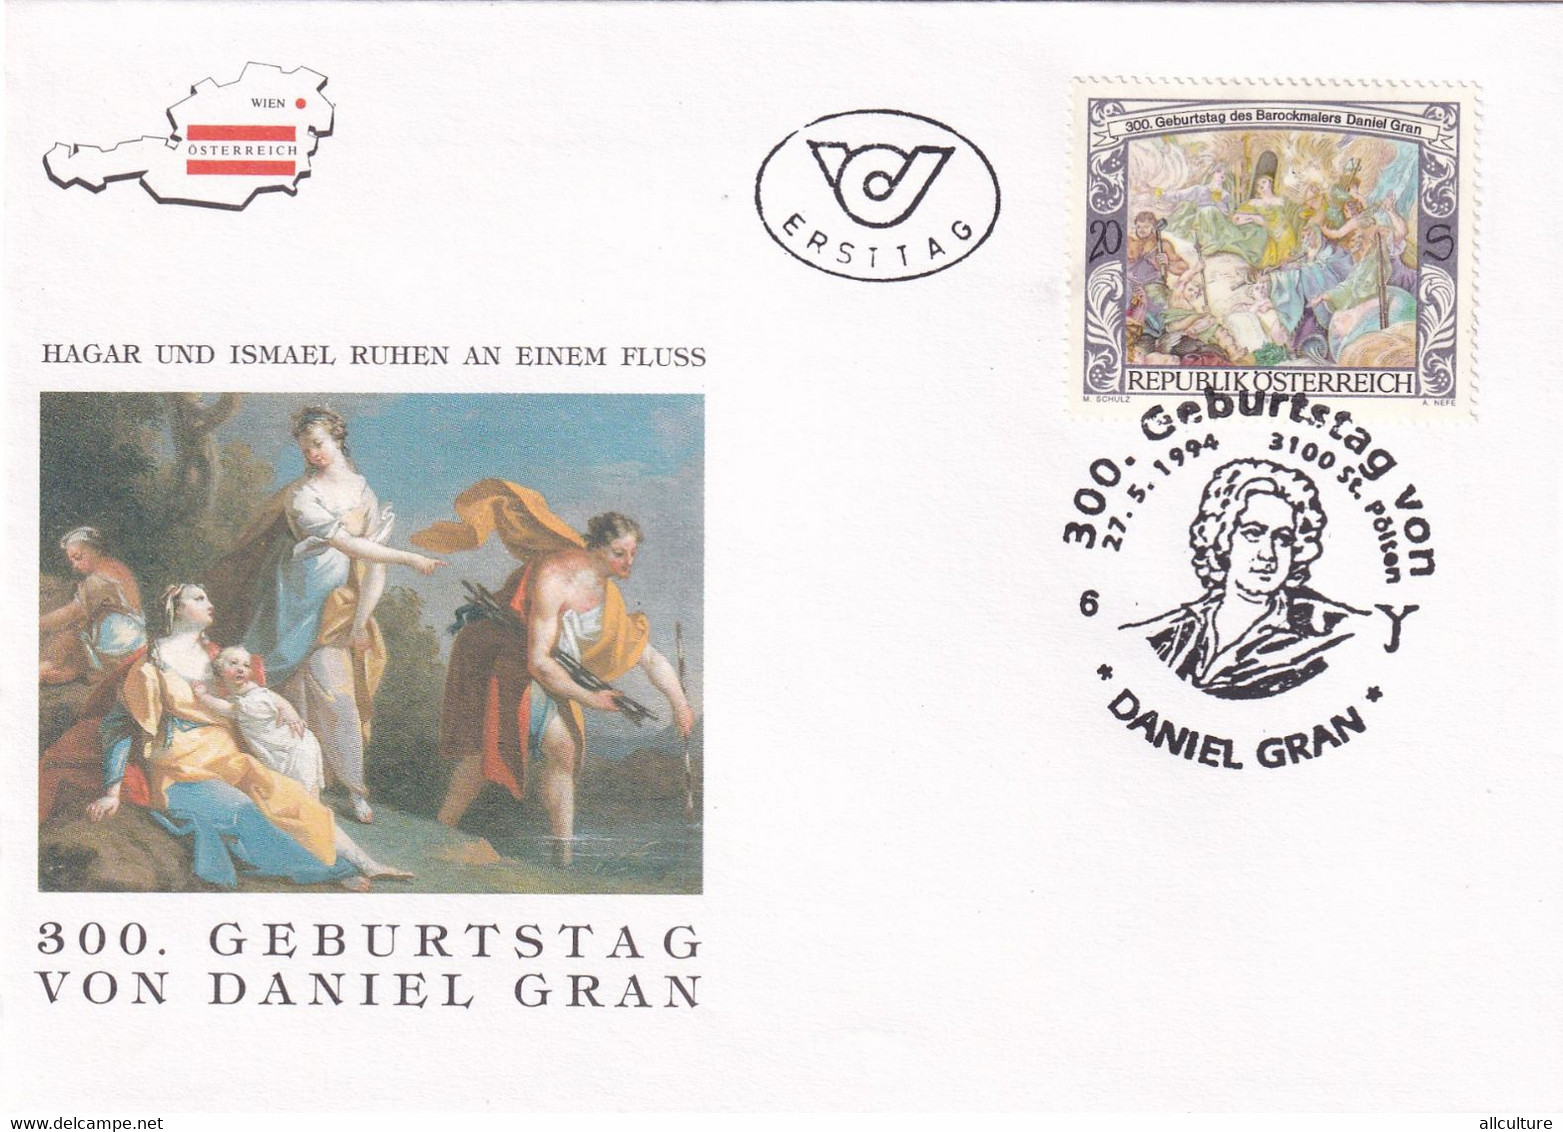 A8393- ERSTTAG DANIEL GRAN PAINTINGS, WEIN 1994 REPUBLIC OSTERREICH AUSTRIA USED STAMP ON COVER - Briefe U. Dokumente